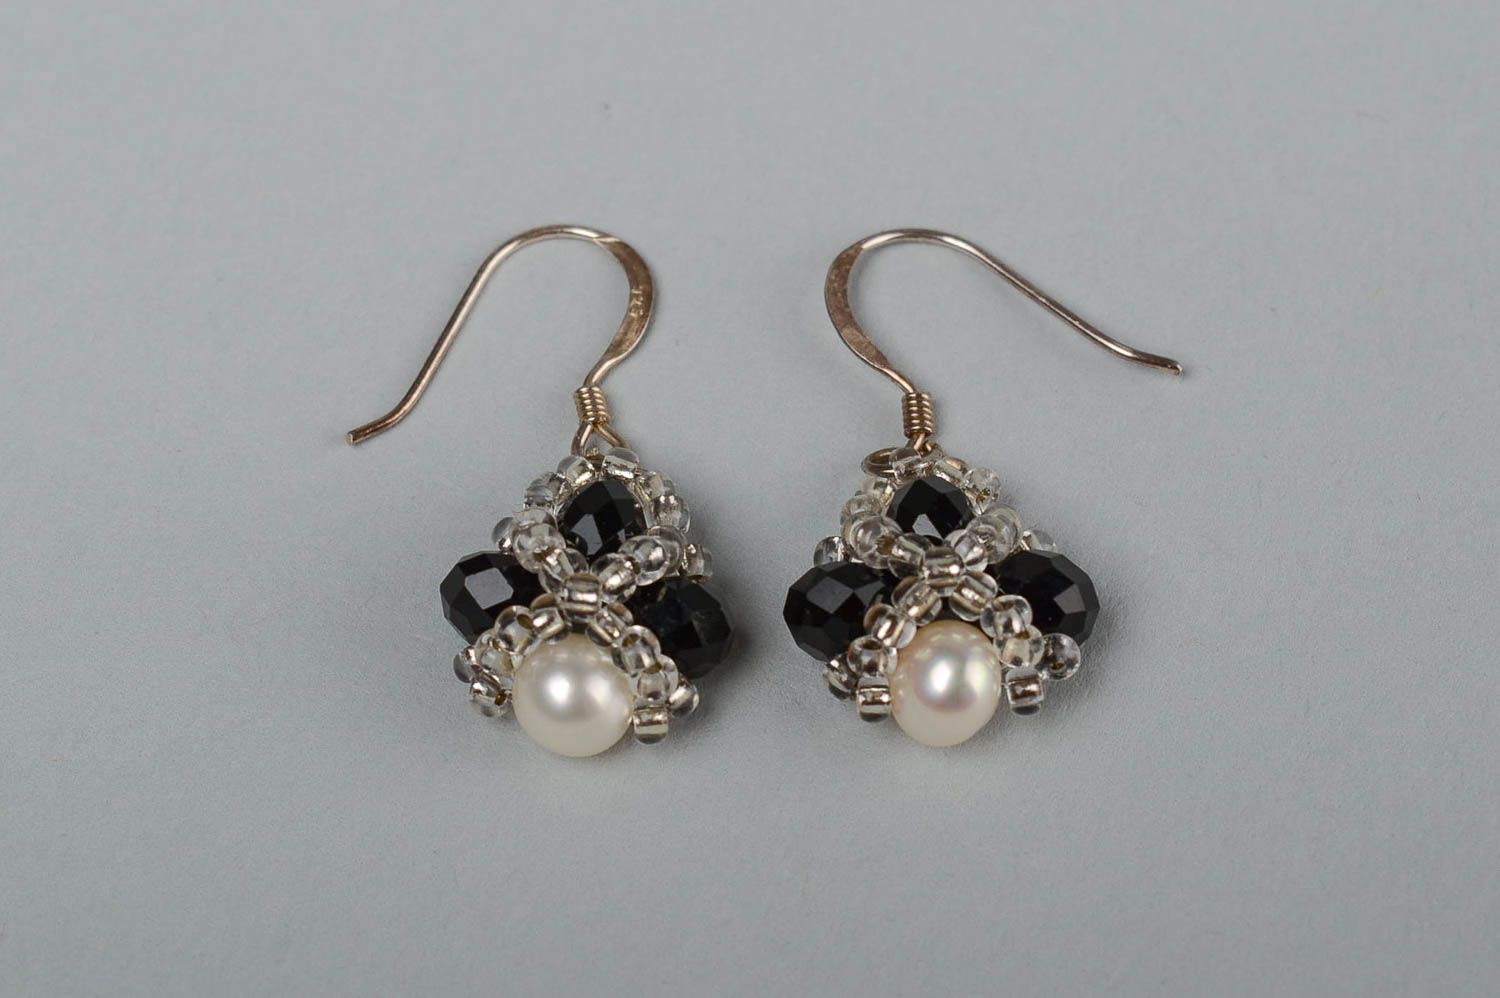 Handmade women earrings with charms pearl earrings evening earrings for girls photo 4